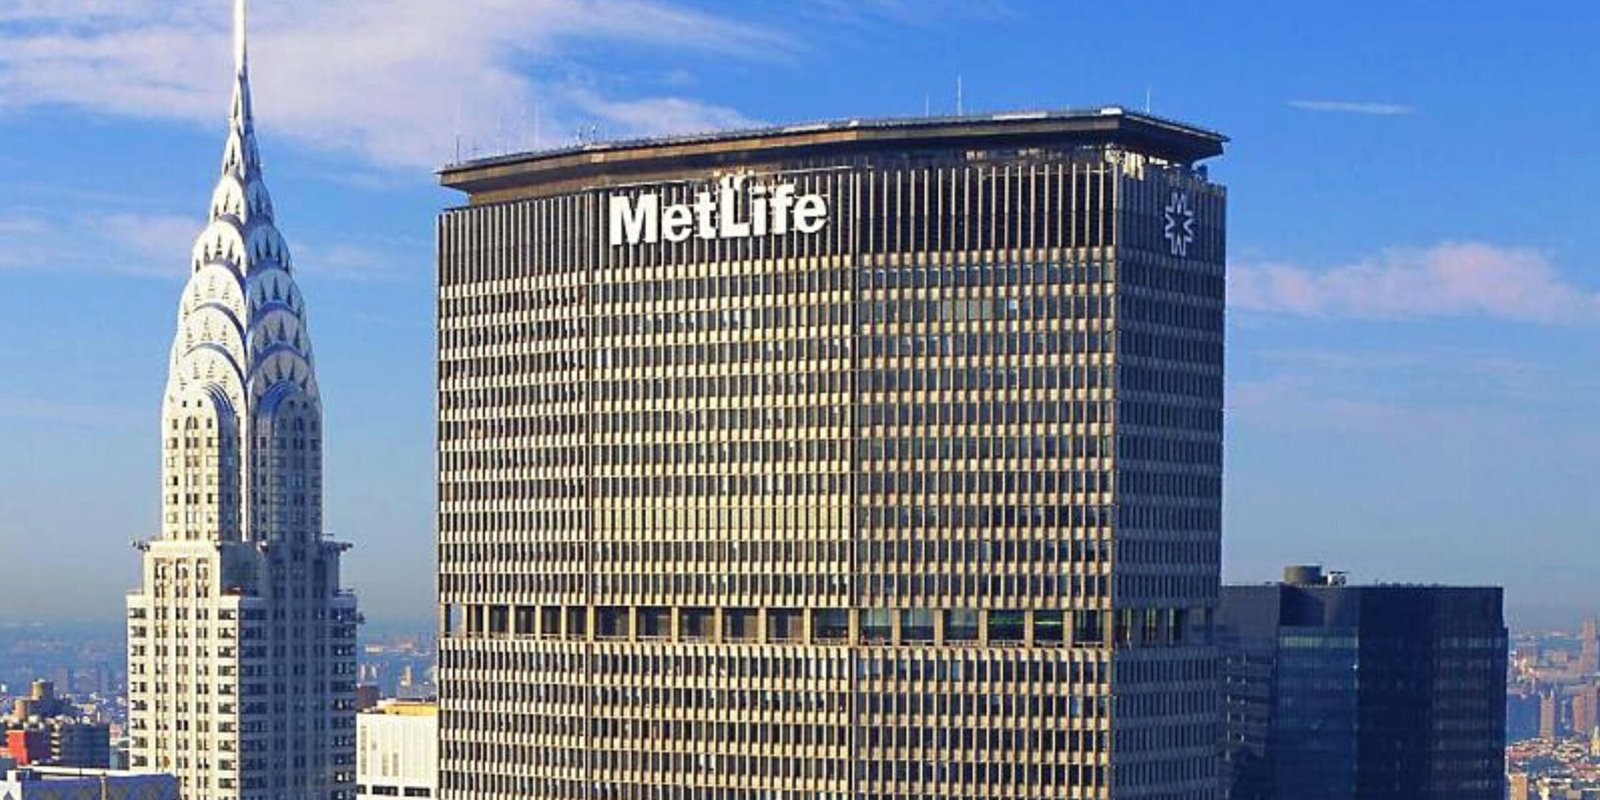 American life insurance company MetLife